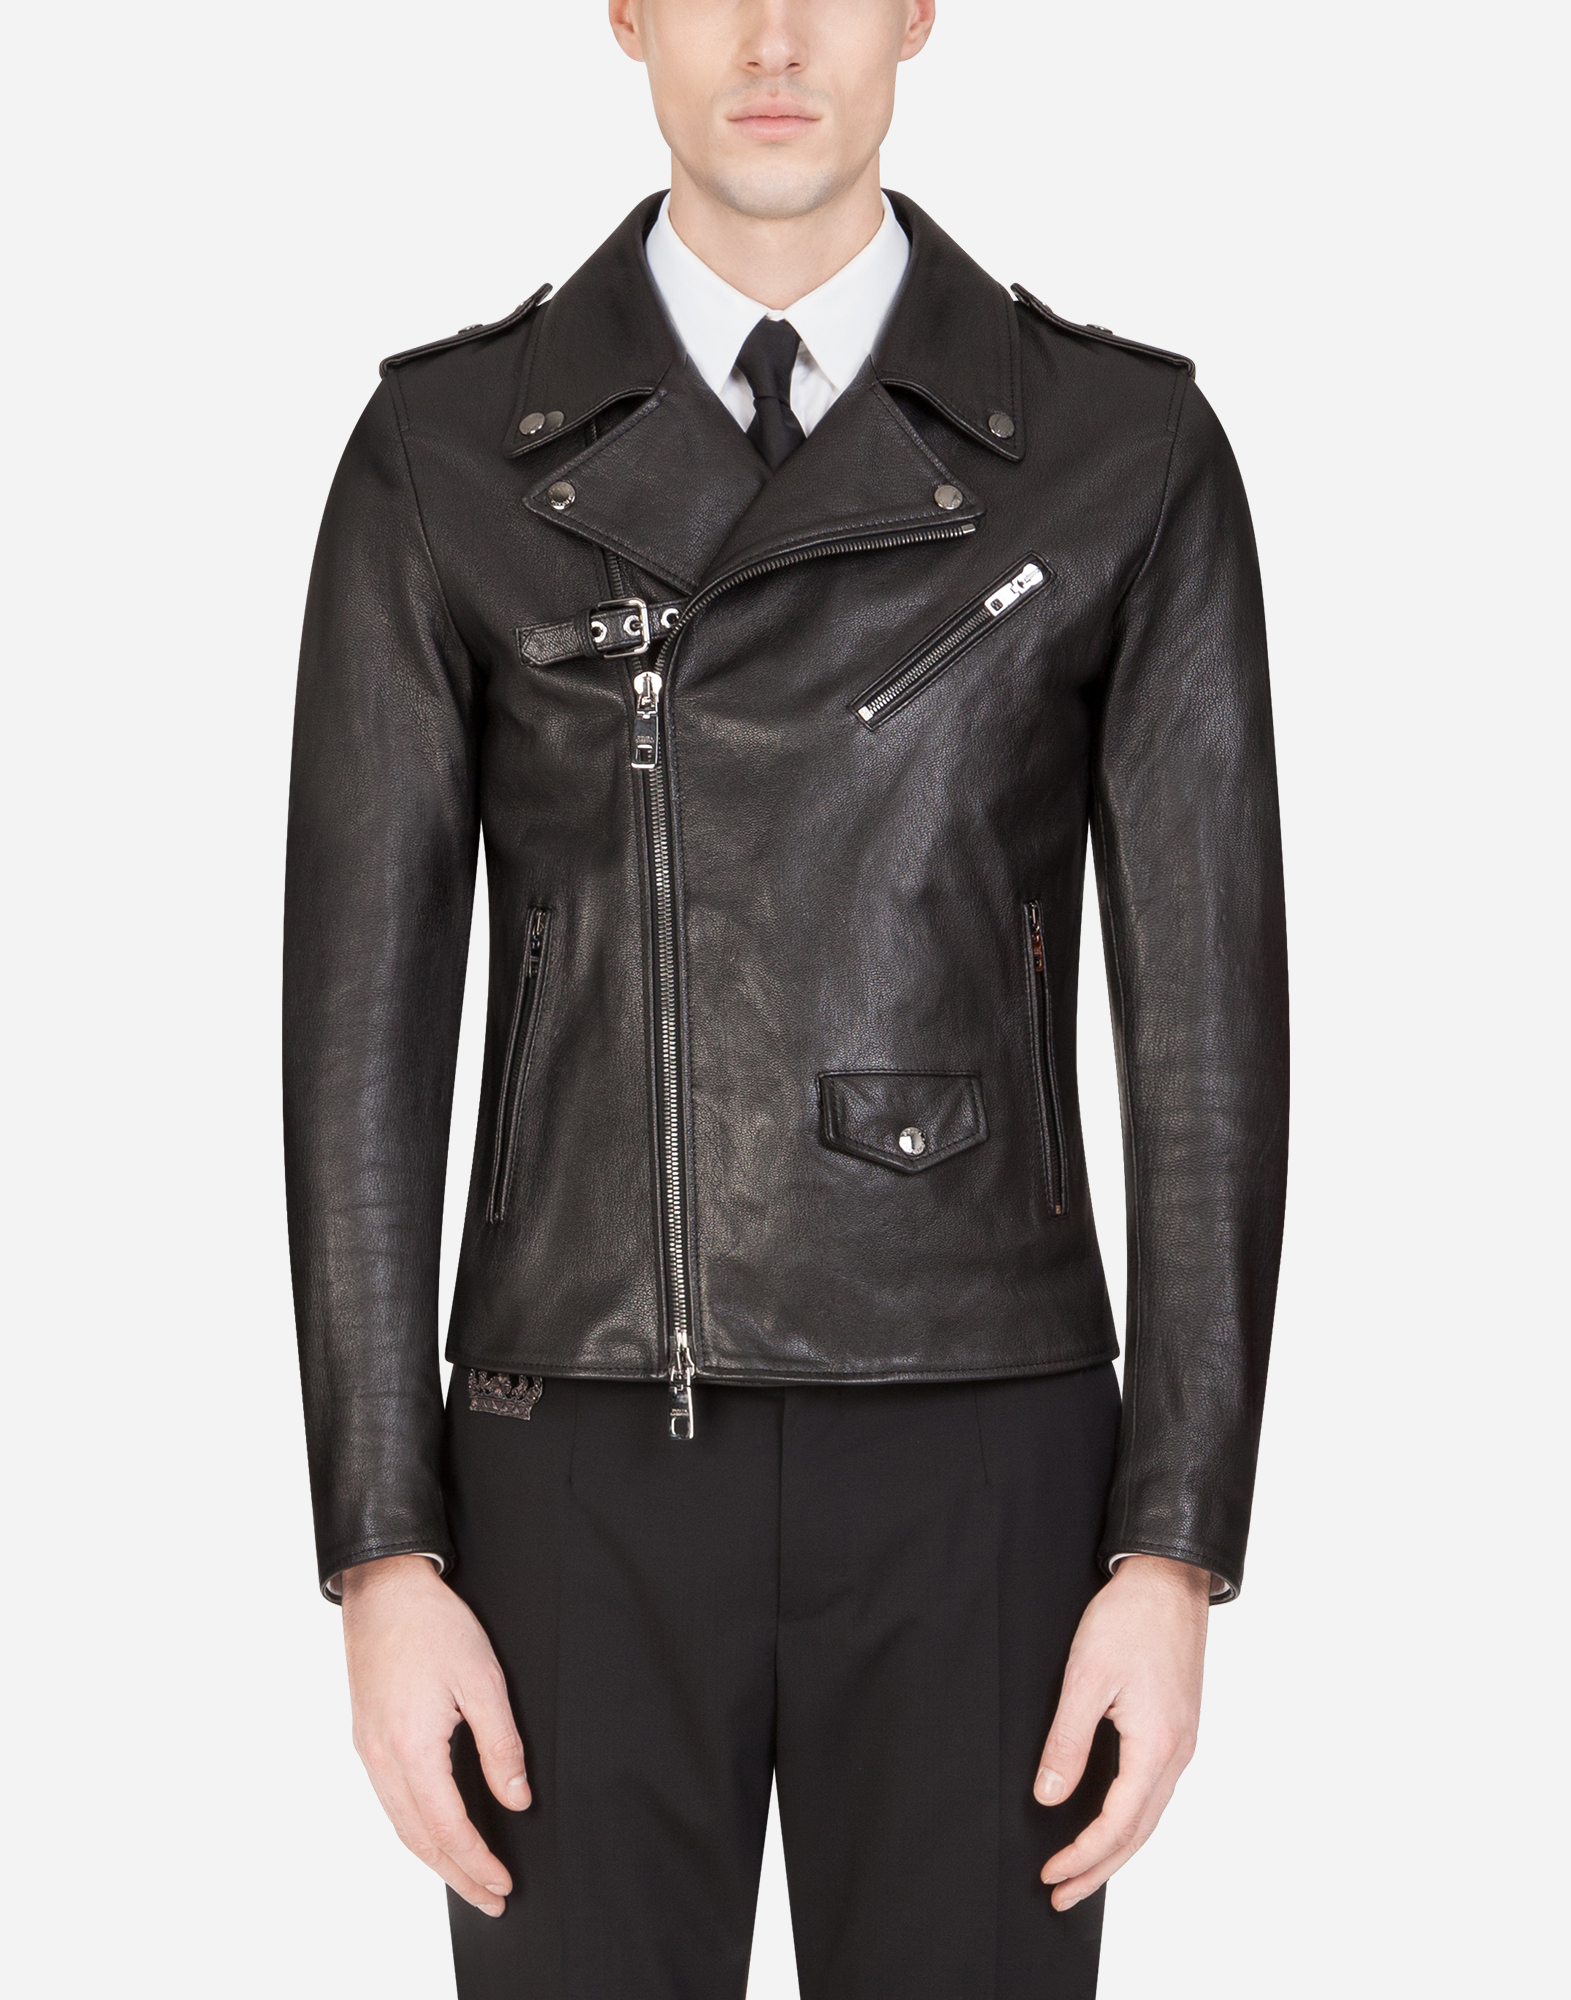 dolce & gabbana men's leather jacket